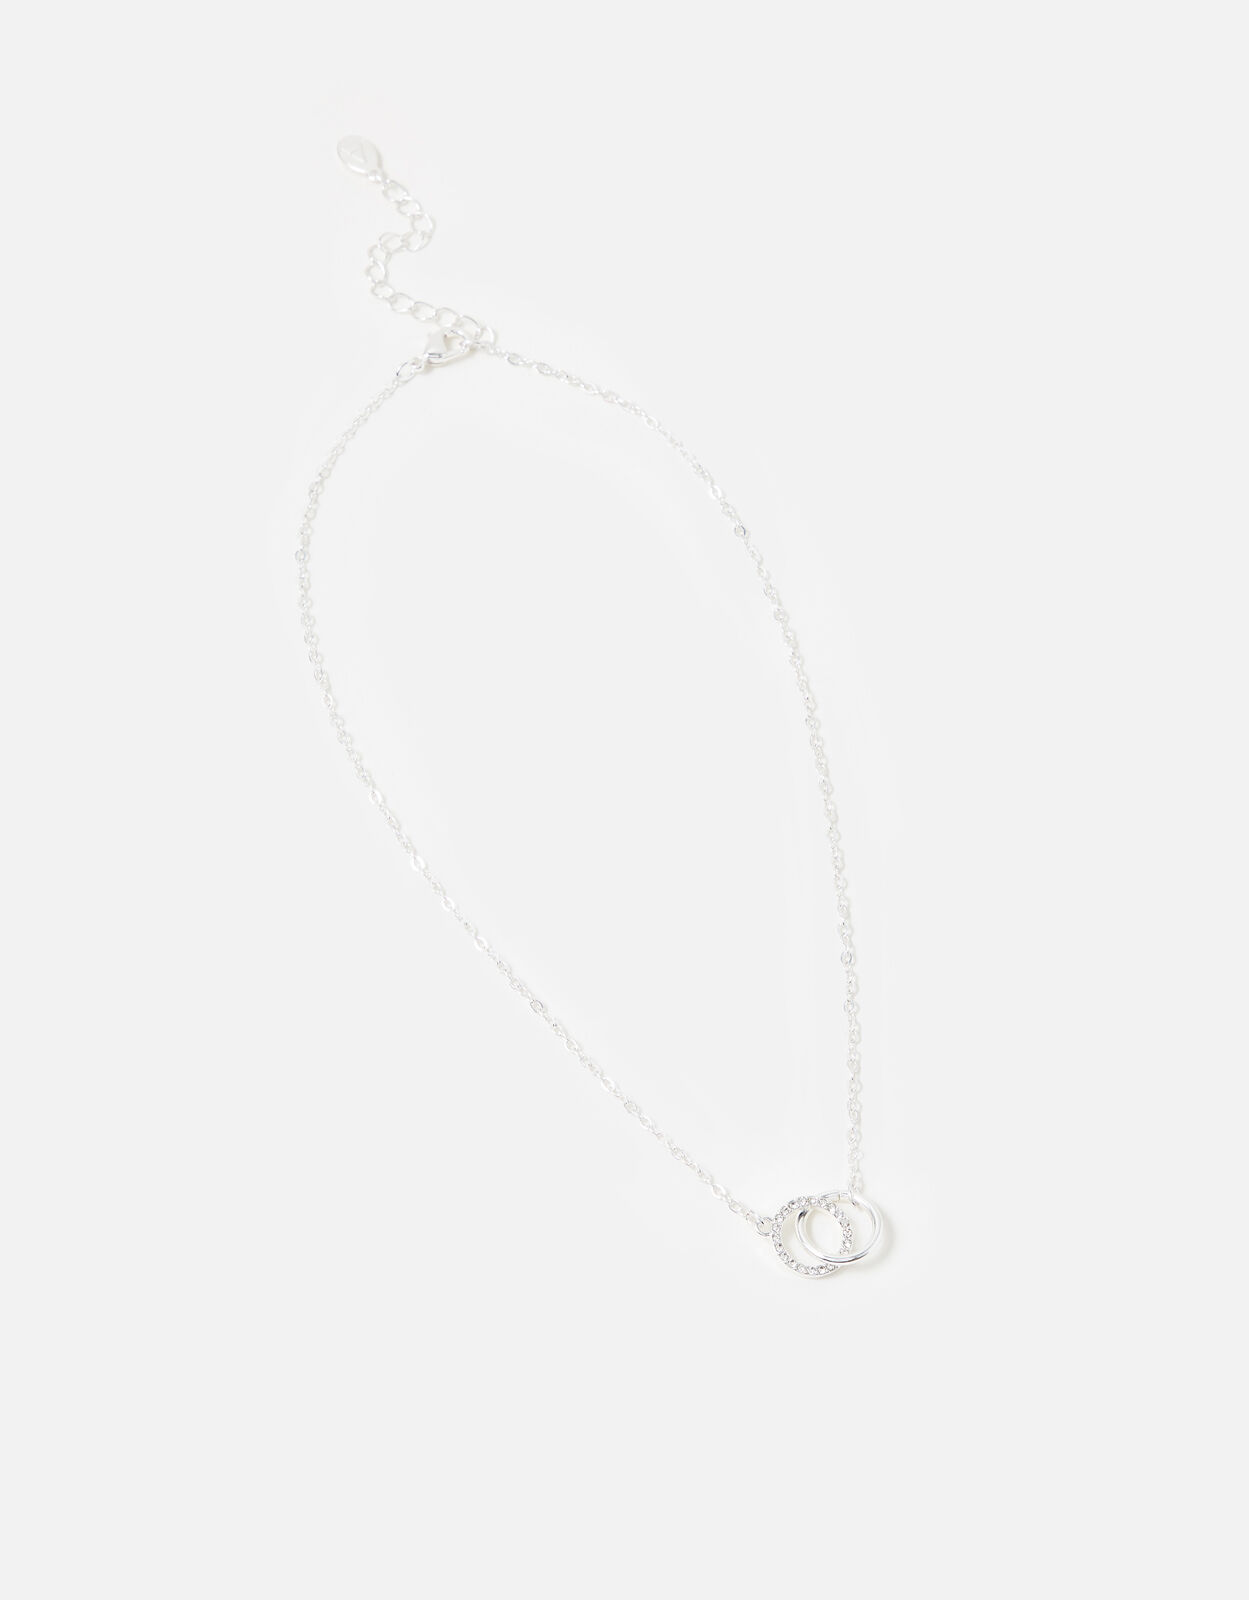 Family Necklace - Linked Circle Necklace | FARUZO